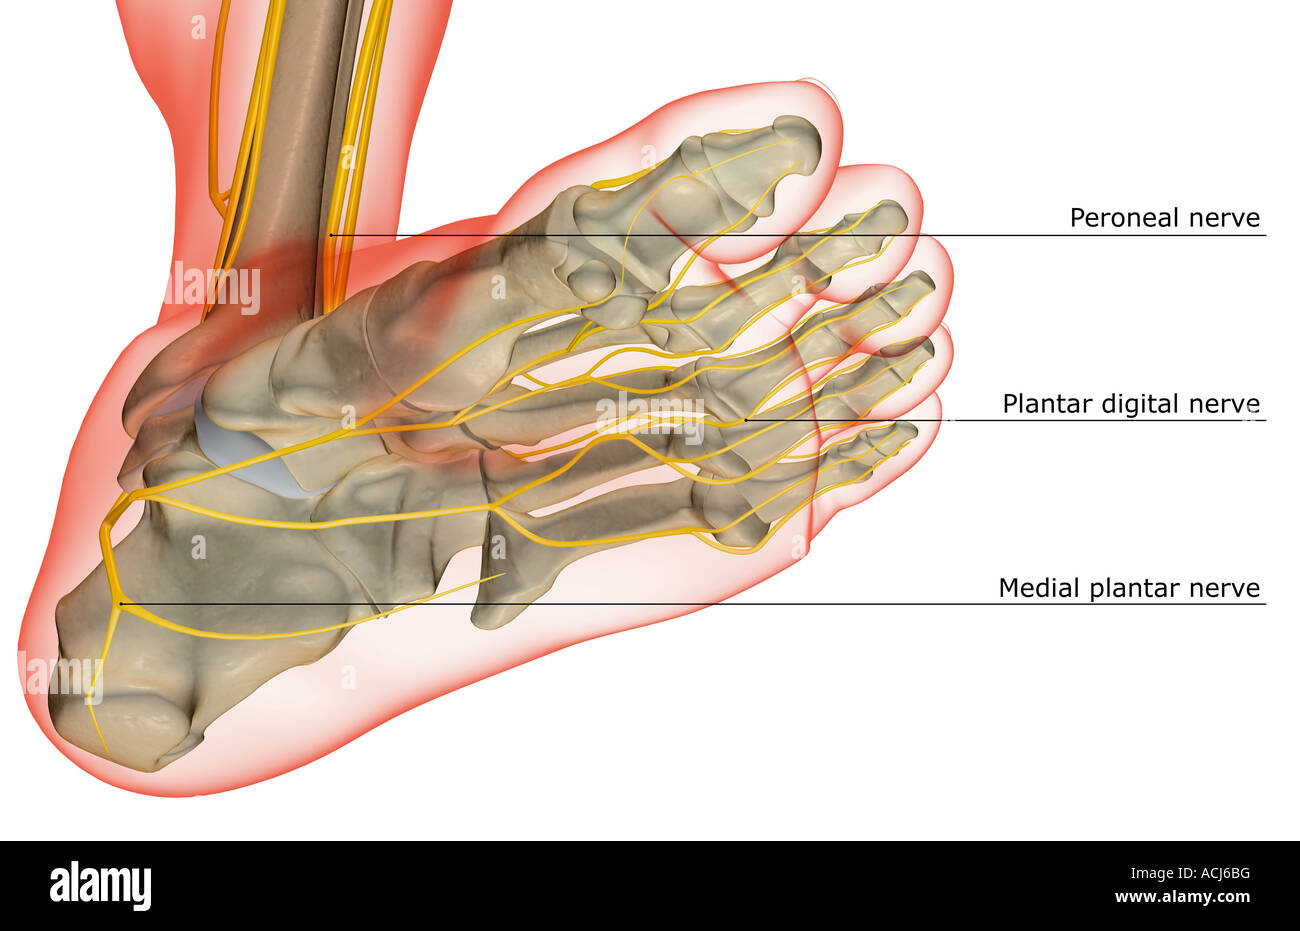 plantar foot anatomy nerves